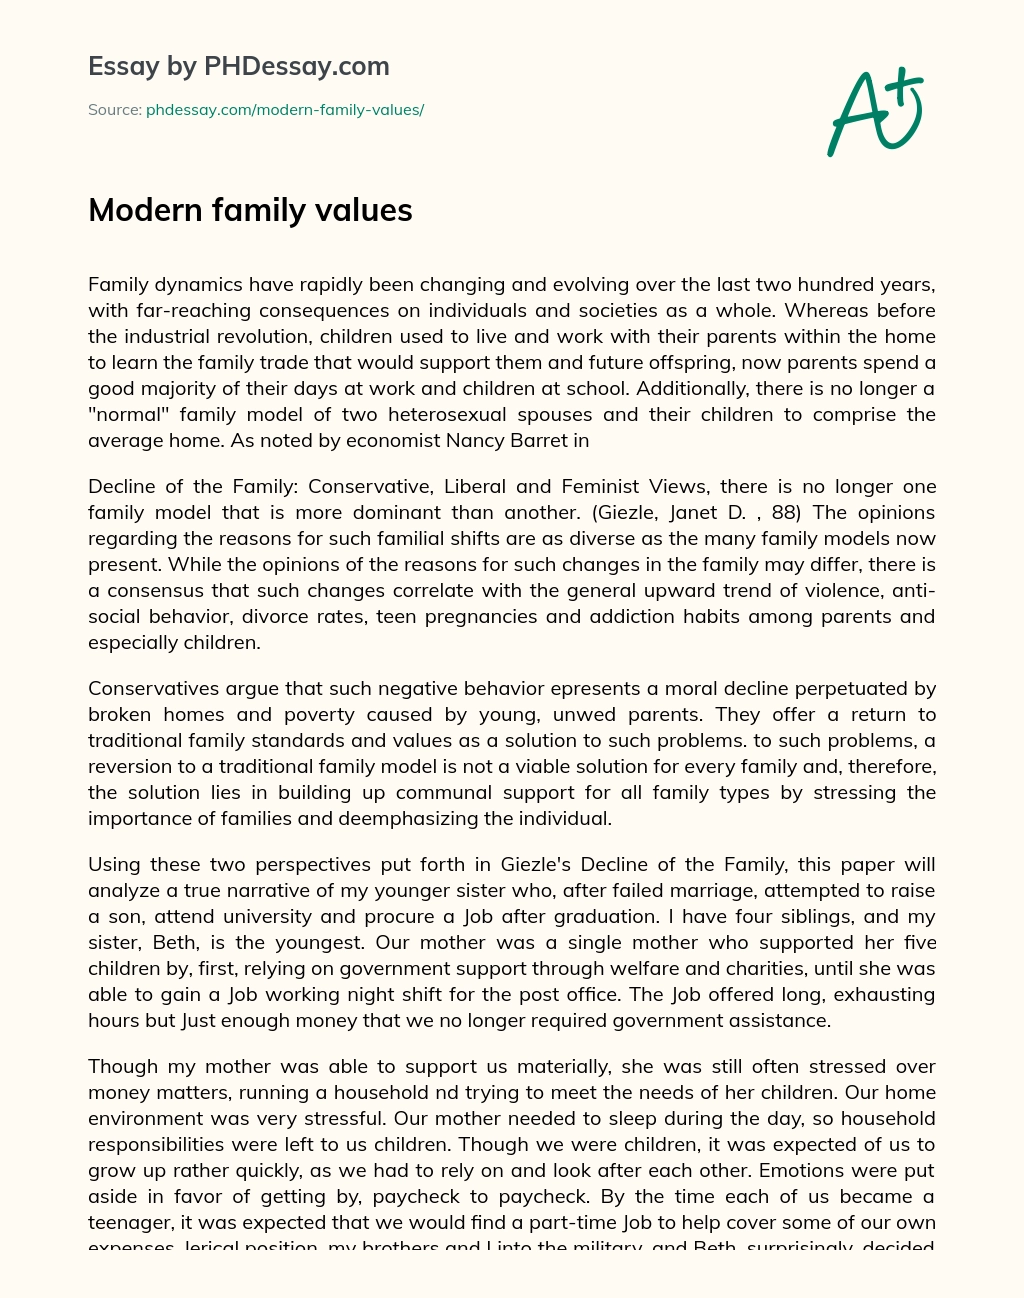 Modern family values essay